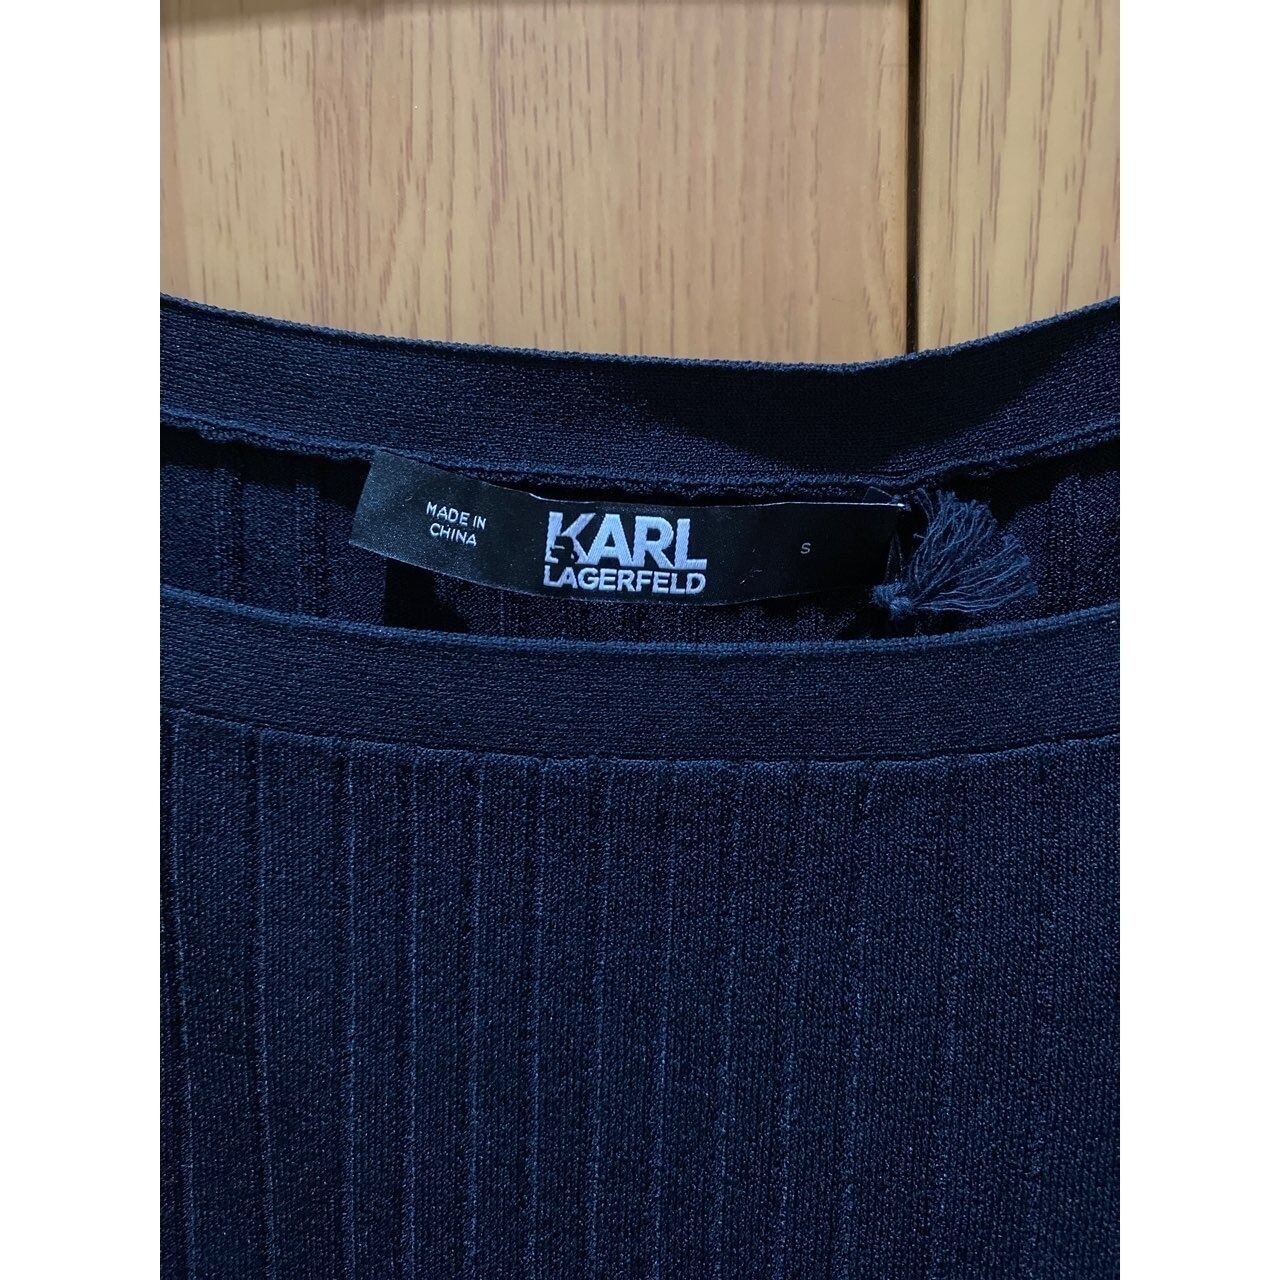 Karl Lagerfeld Black Puff Sleeve Blouse